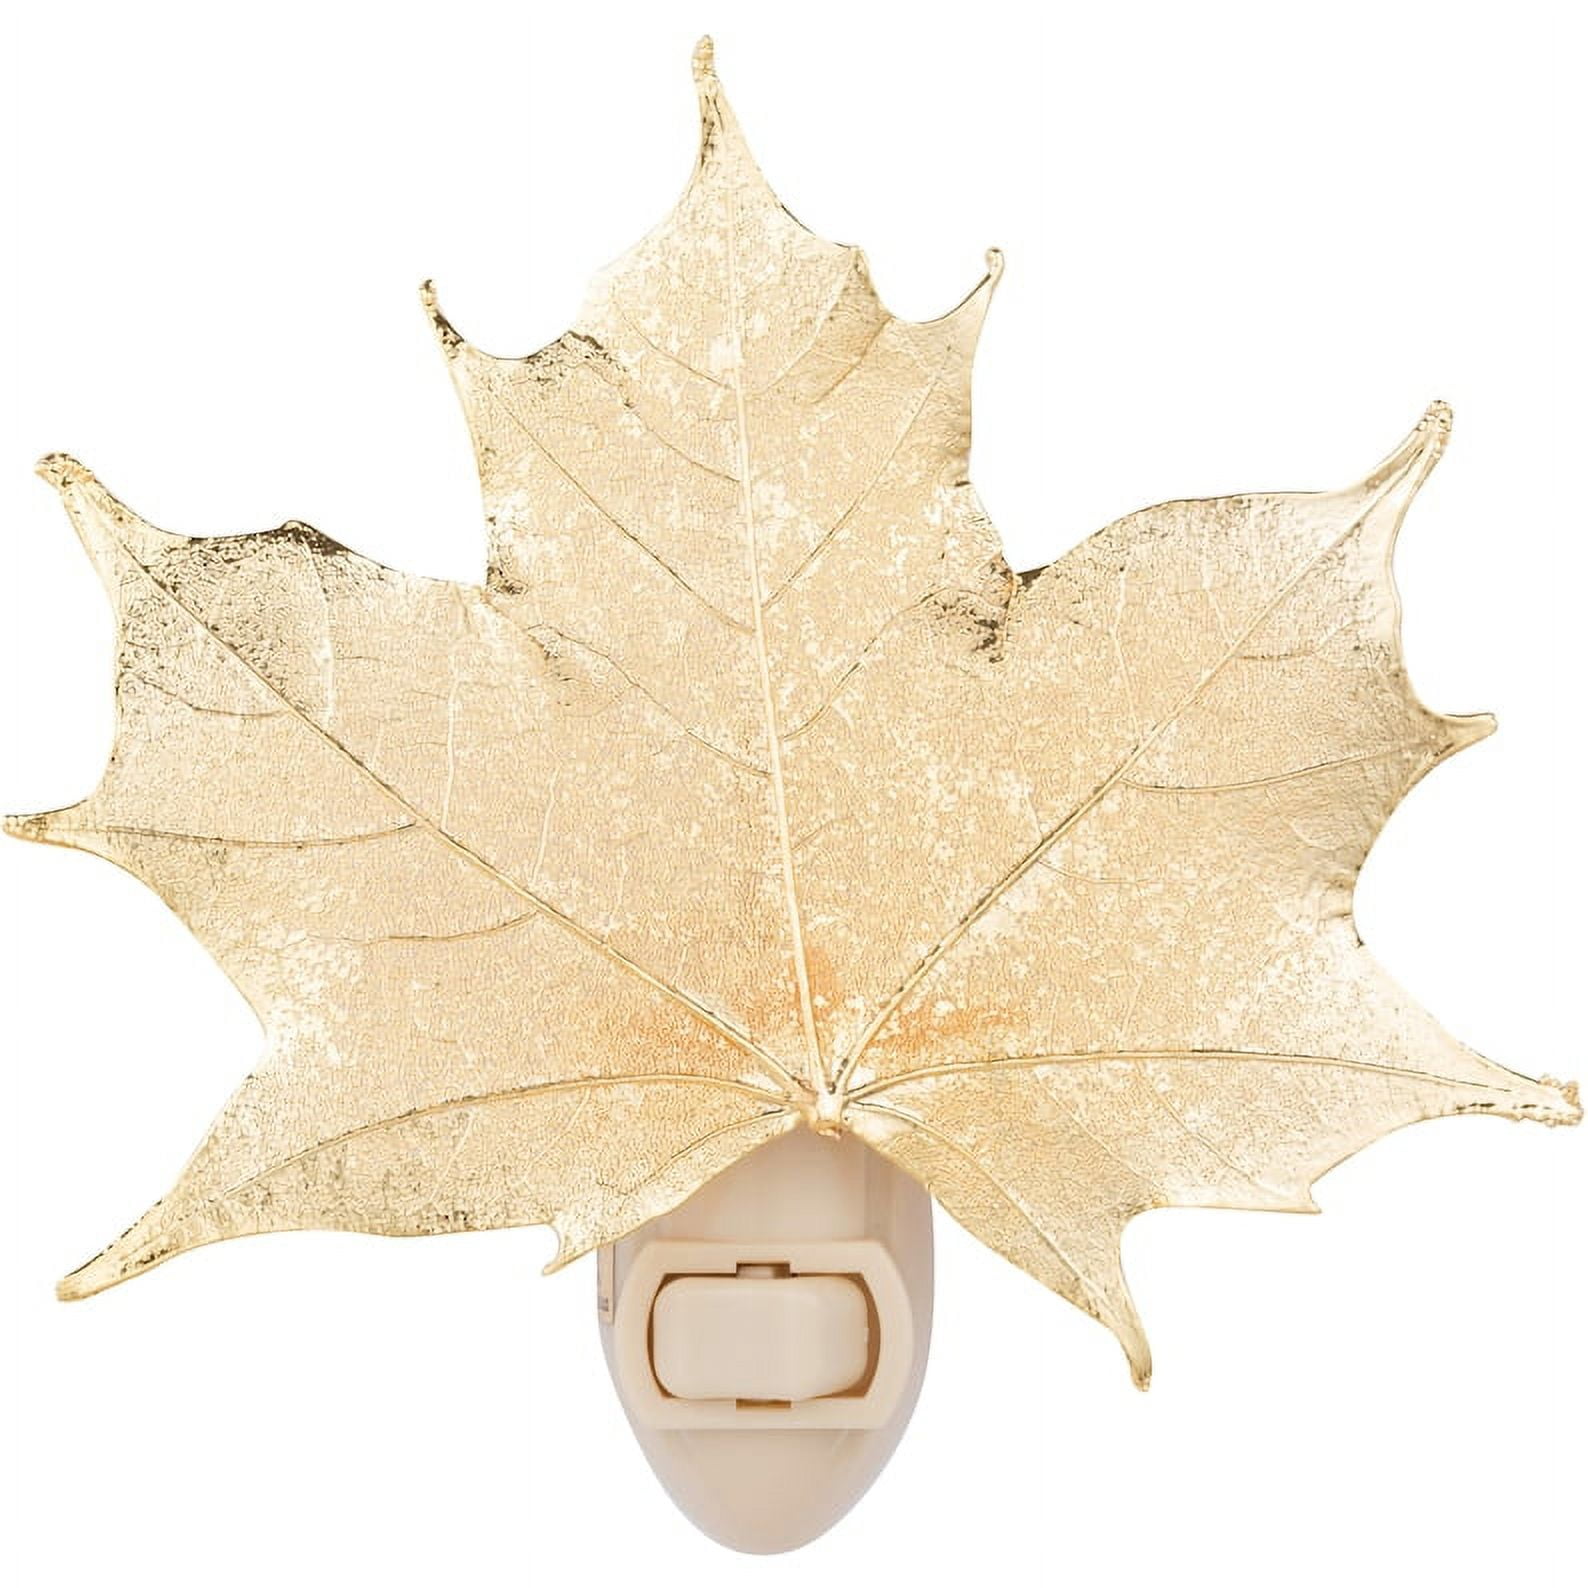 Real Sugar Maple Leaf Night Light - 24K Gold or Copper